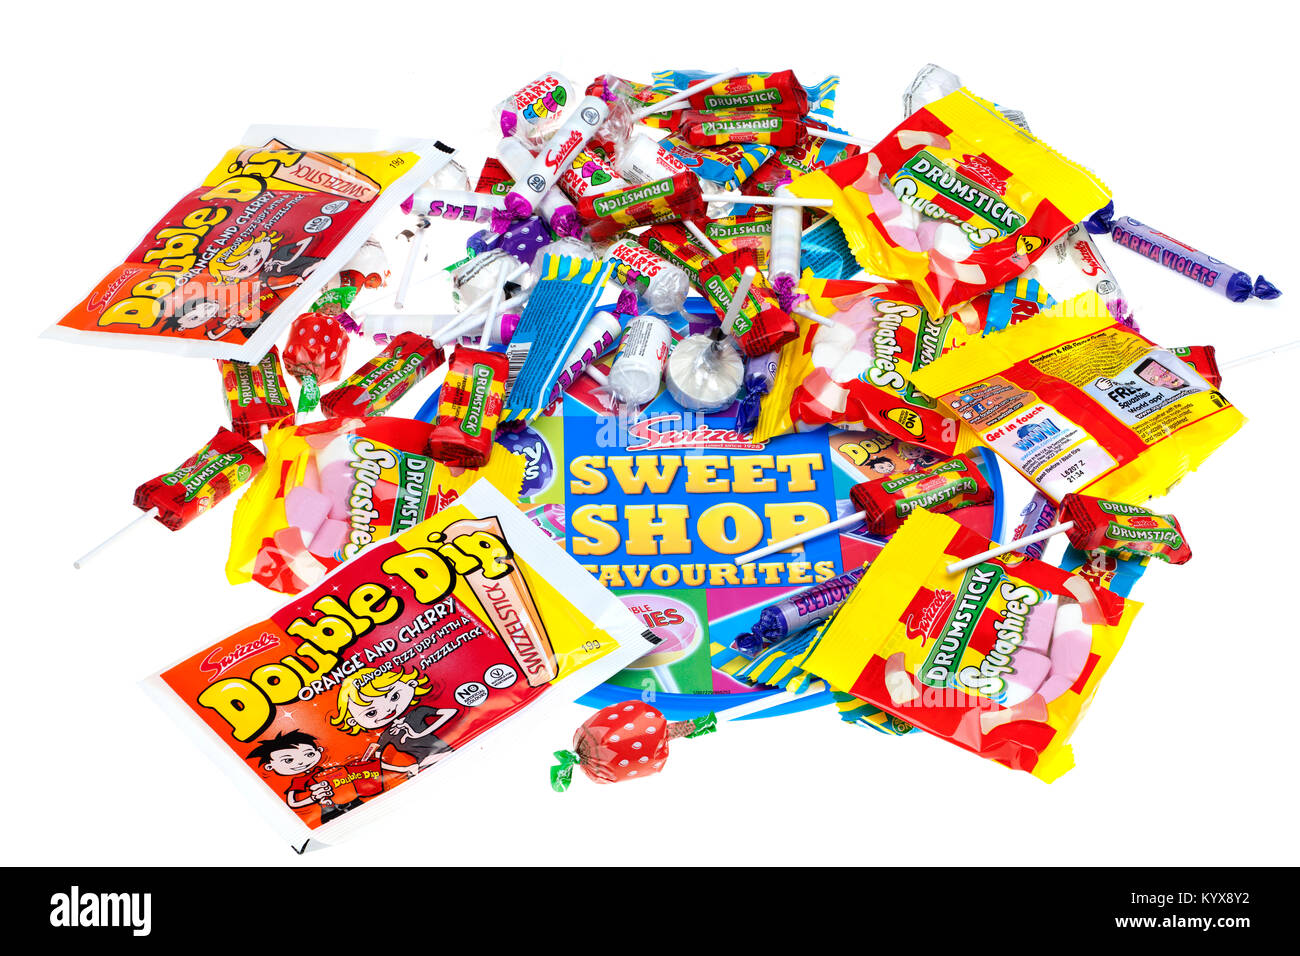 Swizzels sweet shop favourites Stock Photo